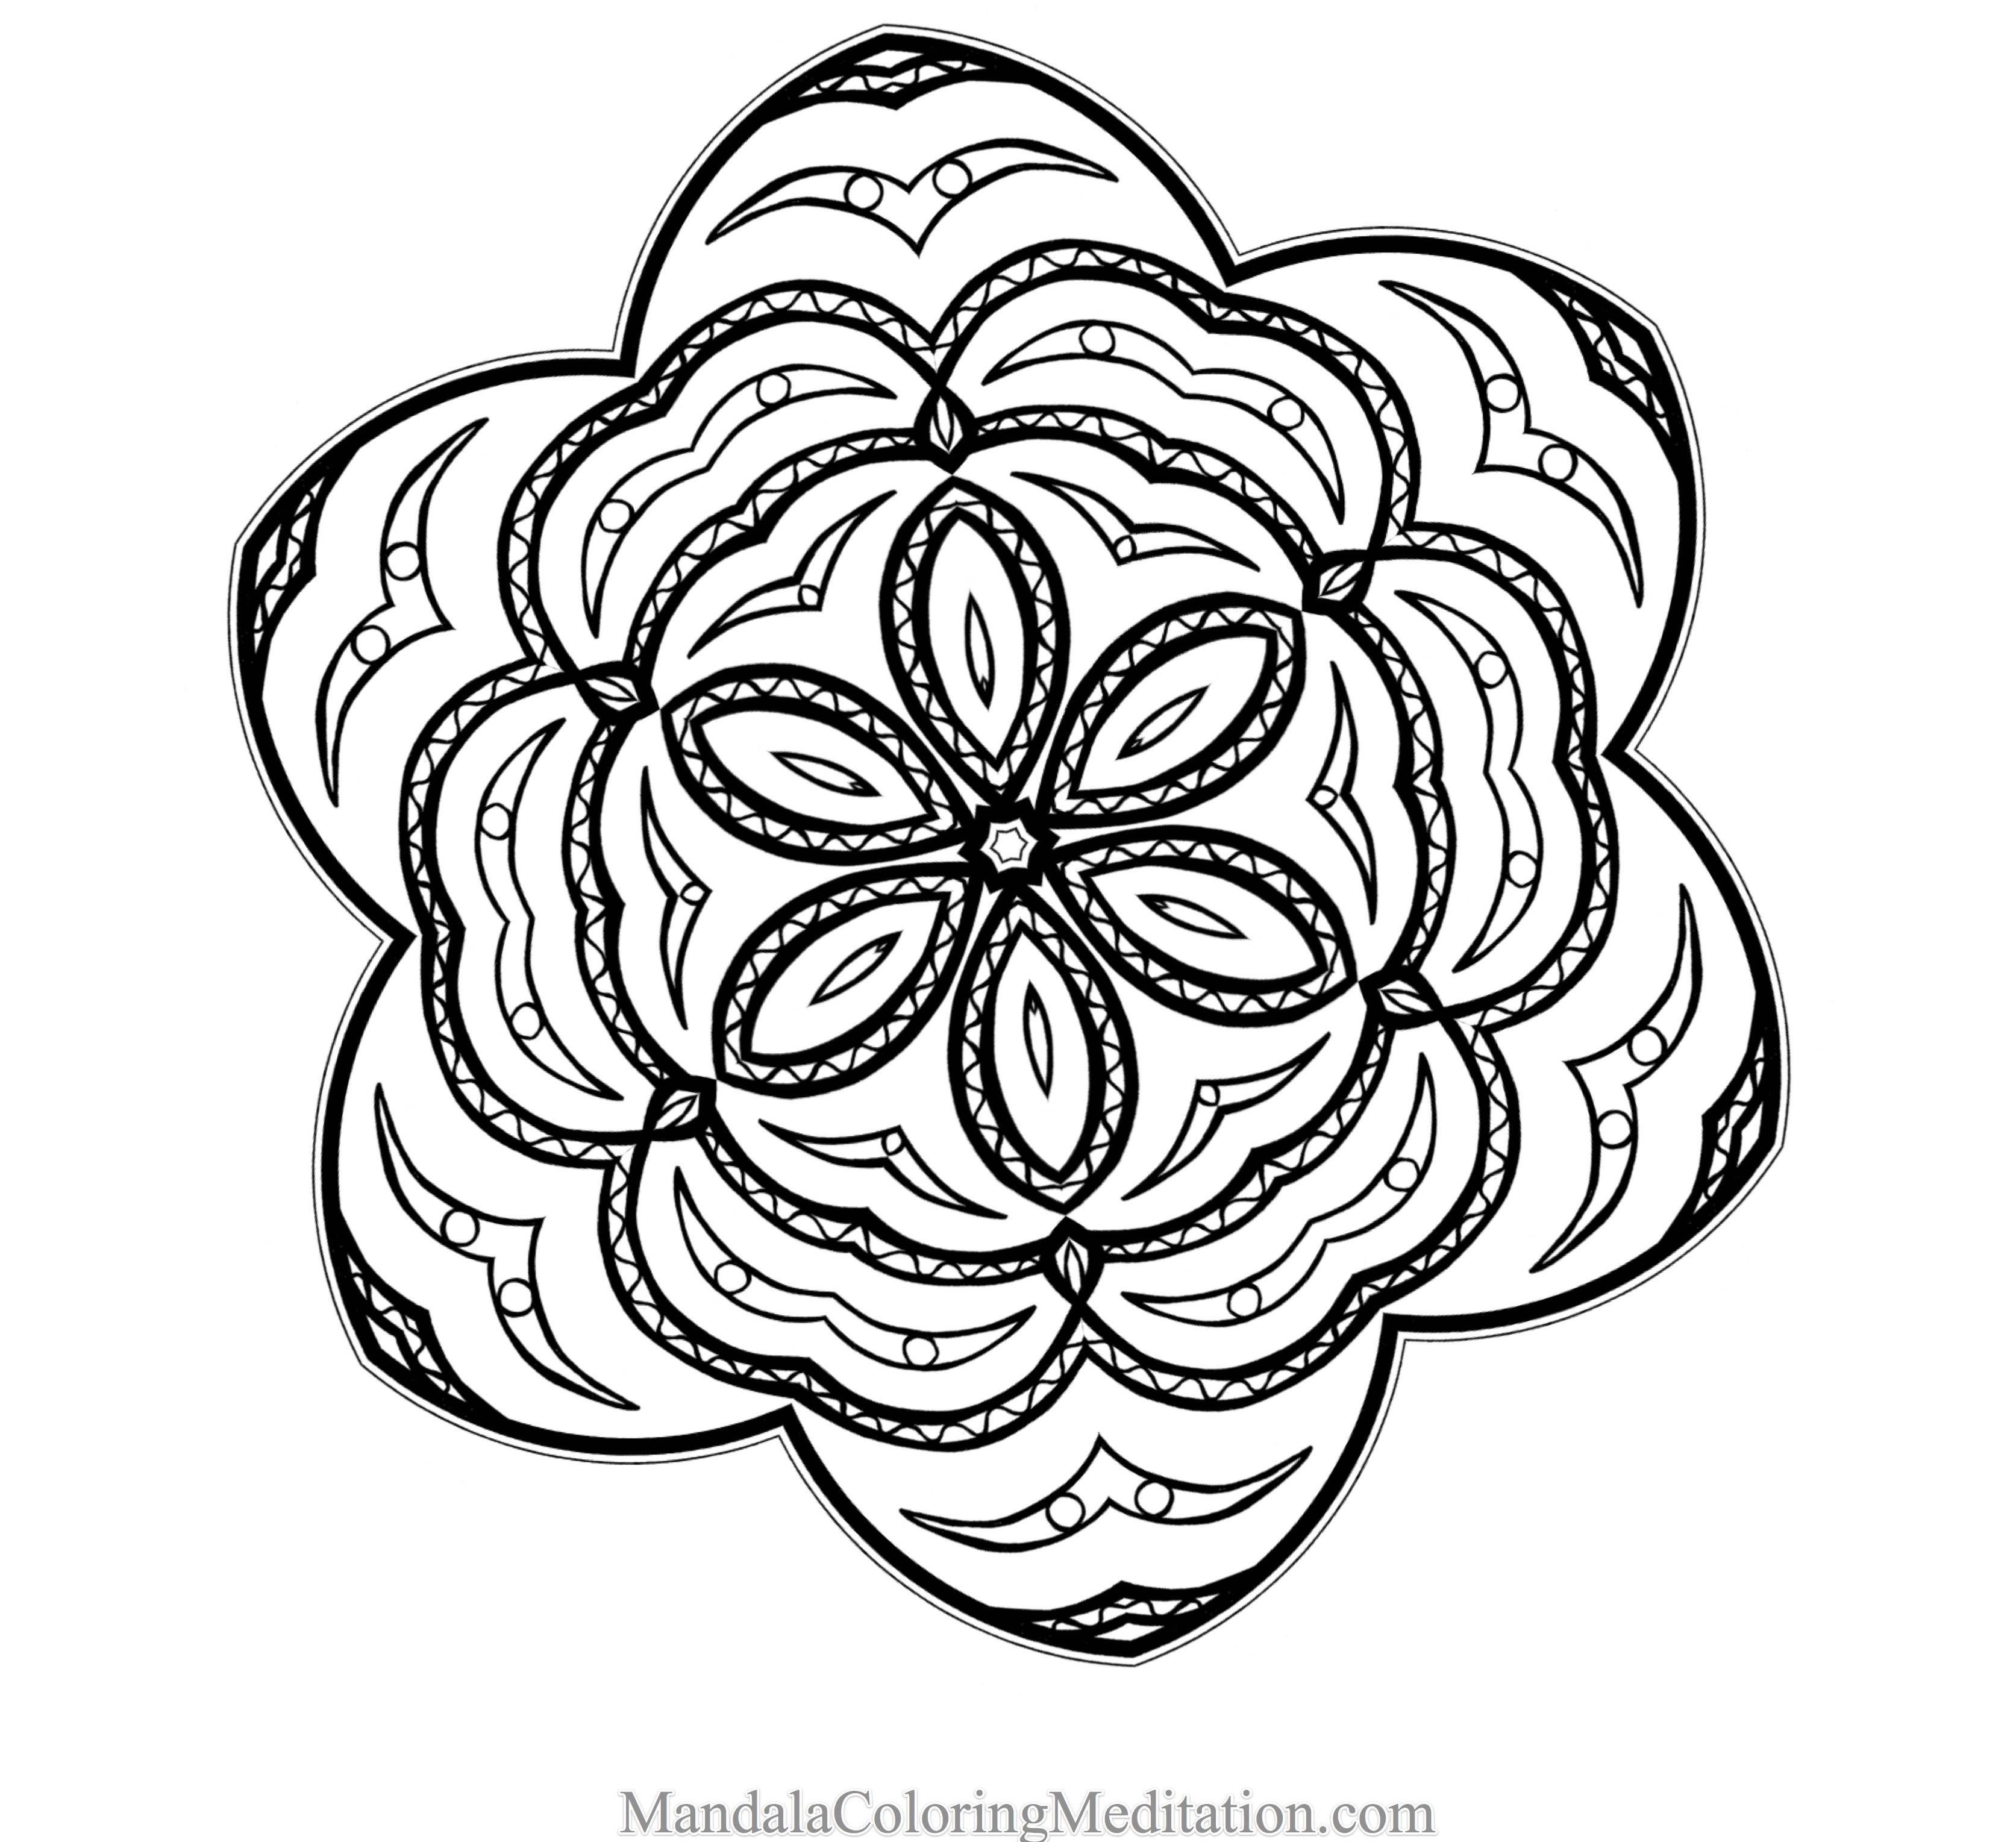 Coloring page: Flowers Mandalas (Mandalas) #117102 - Free Printable Coloring Pages